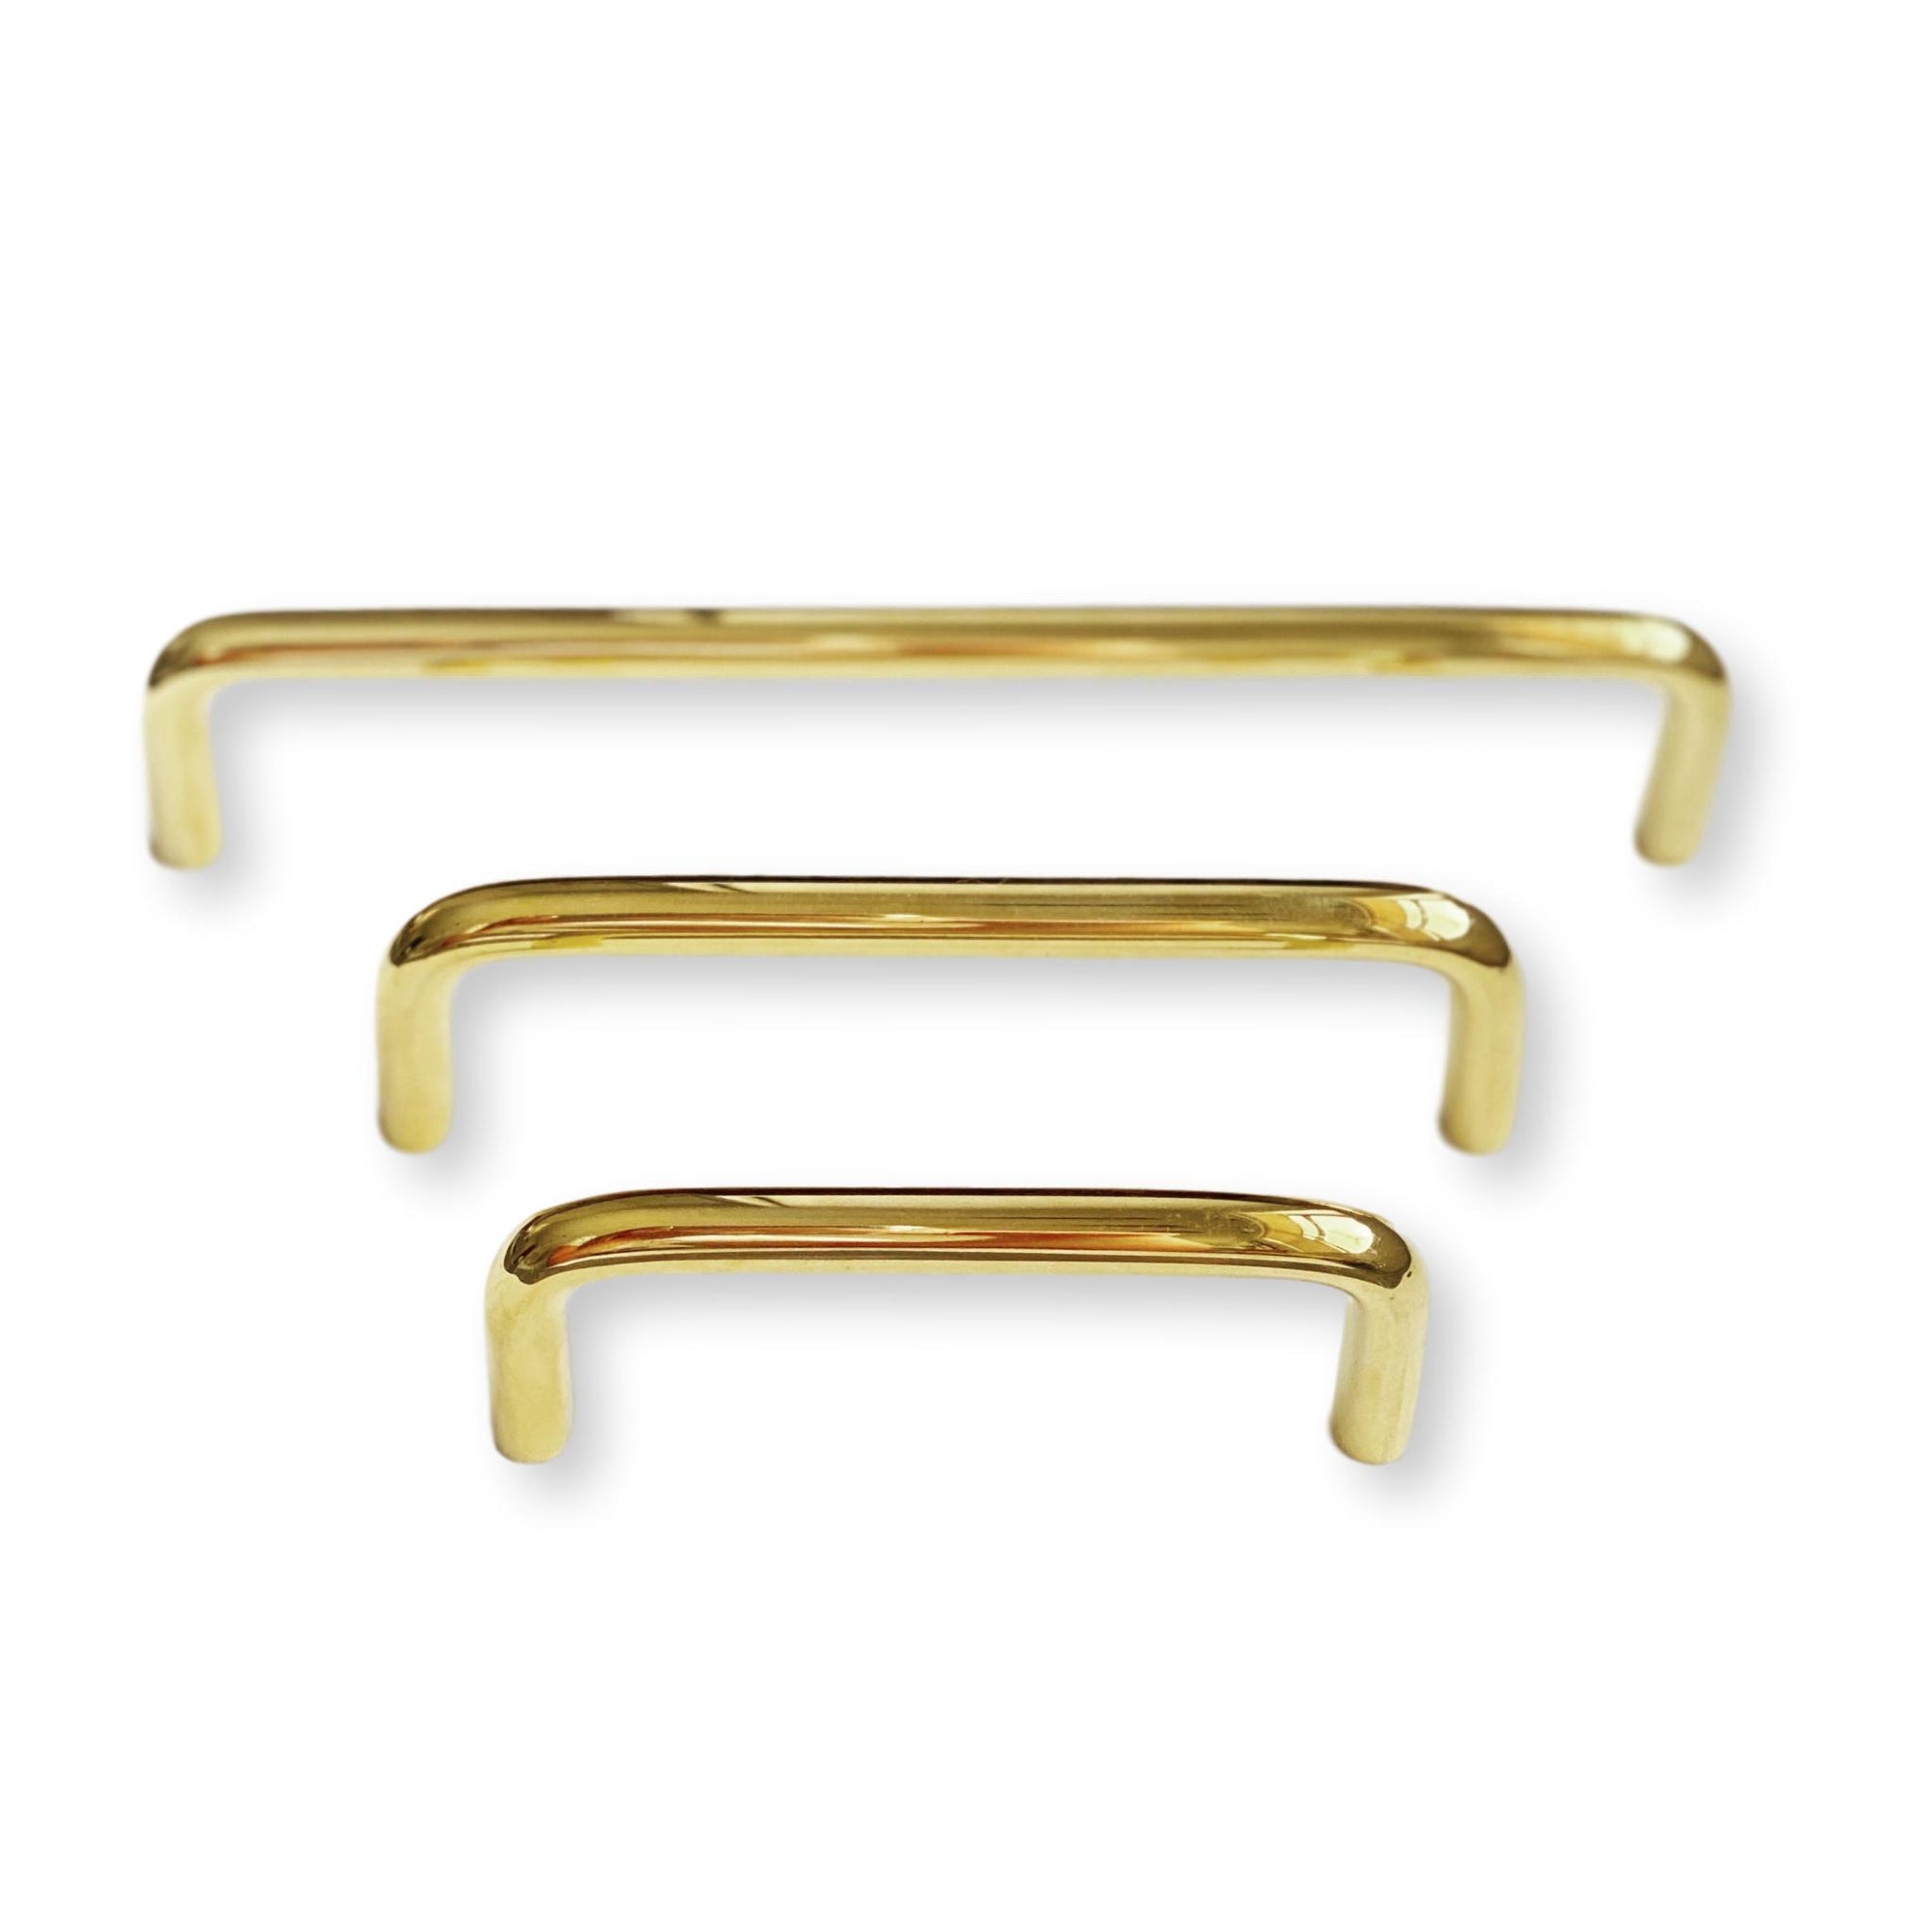 unlacquered brass drawer pulls